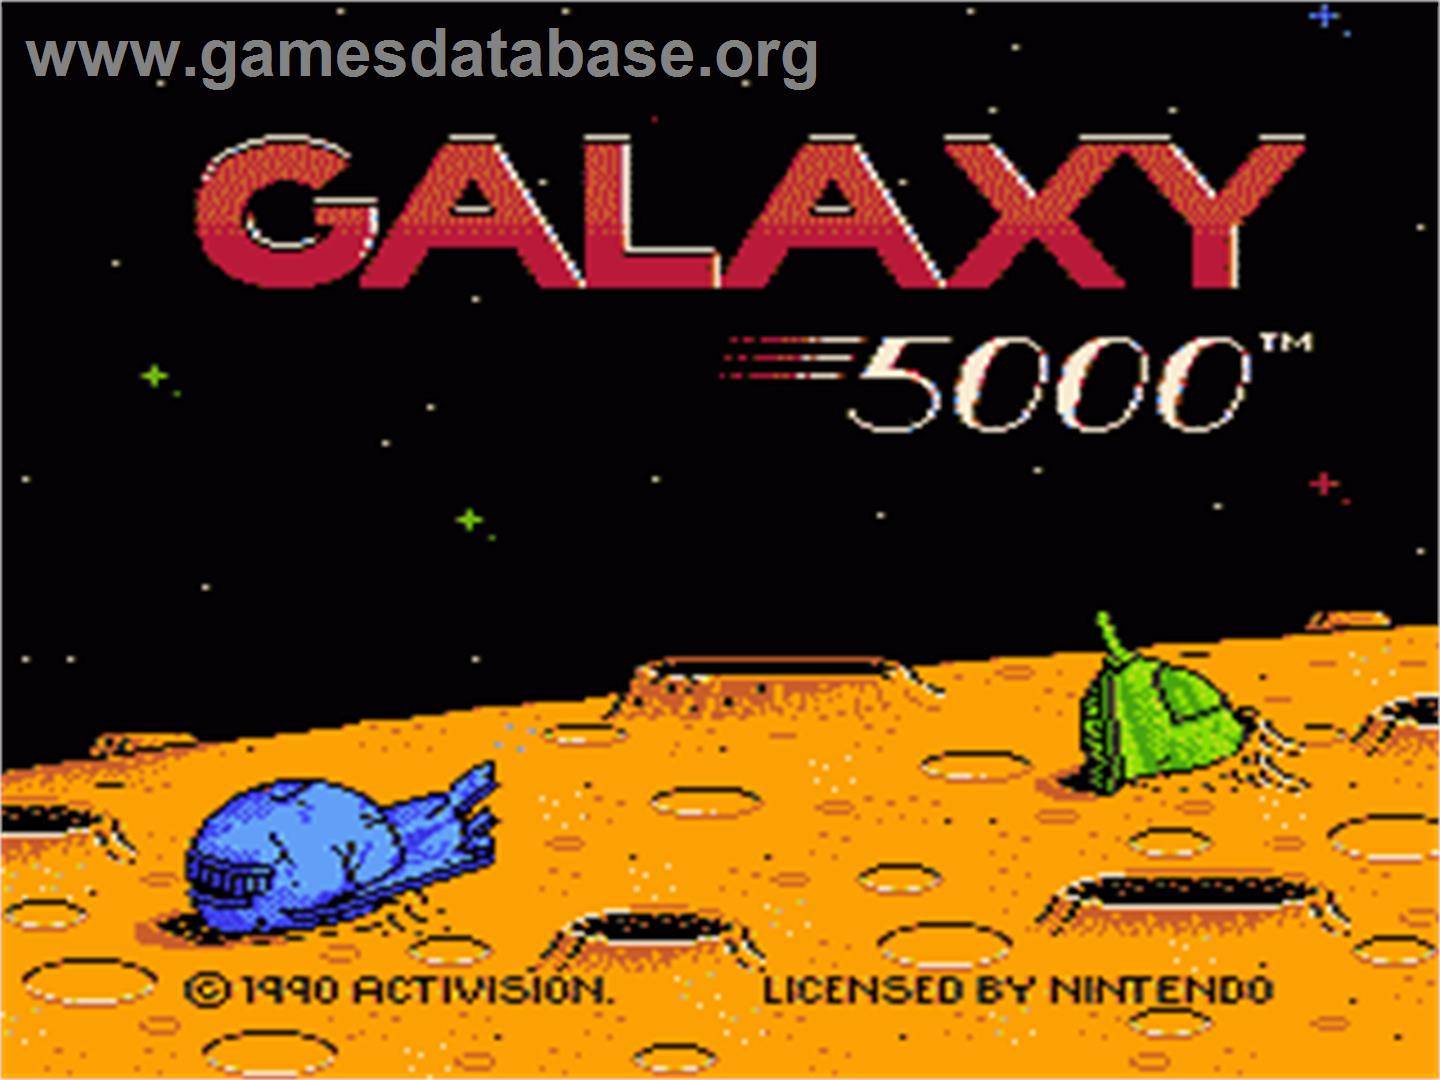 Galaxy 5000: Racing in the 51st Century - Nintendo NES - Artwork - Title Screen